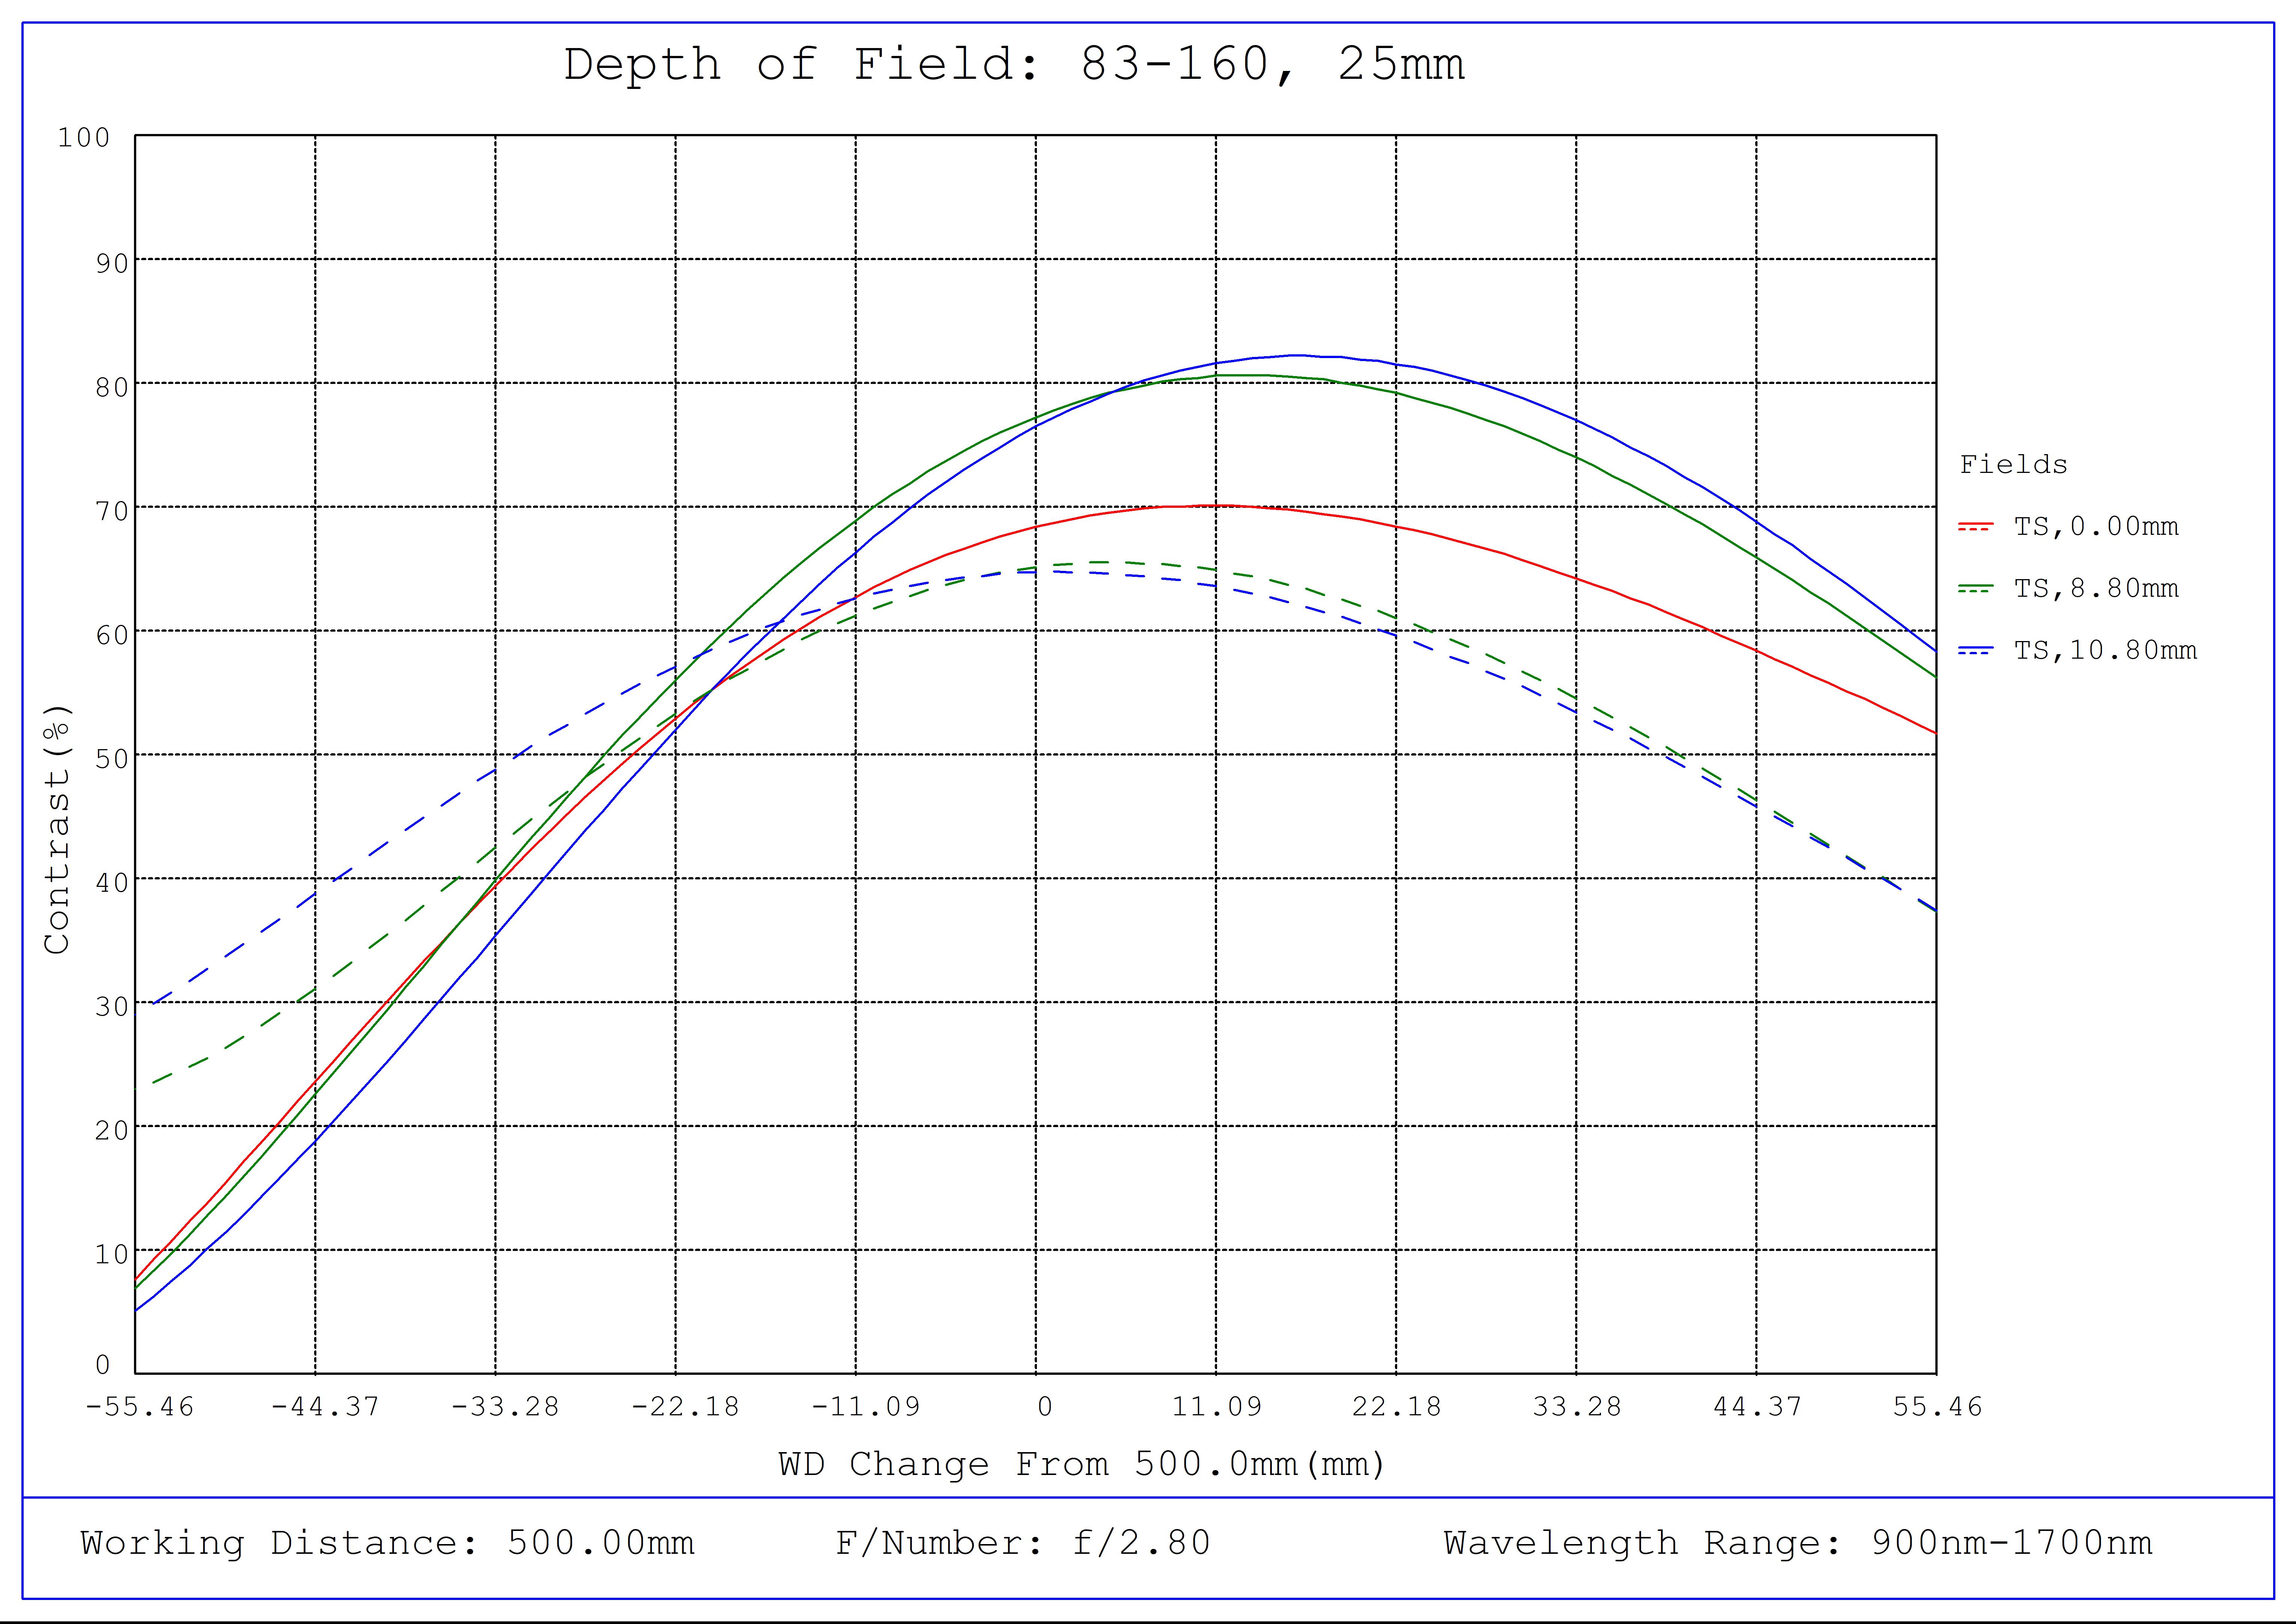 #83-160, 25mm SWIR Series Fixed Focal Length Lens, Depth of Field Plot, 500mm Working Distance, f2.8